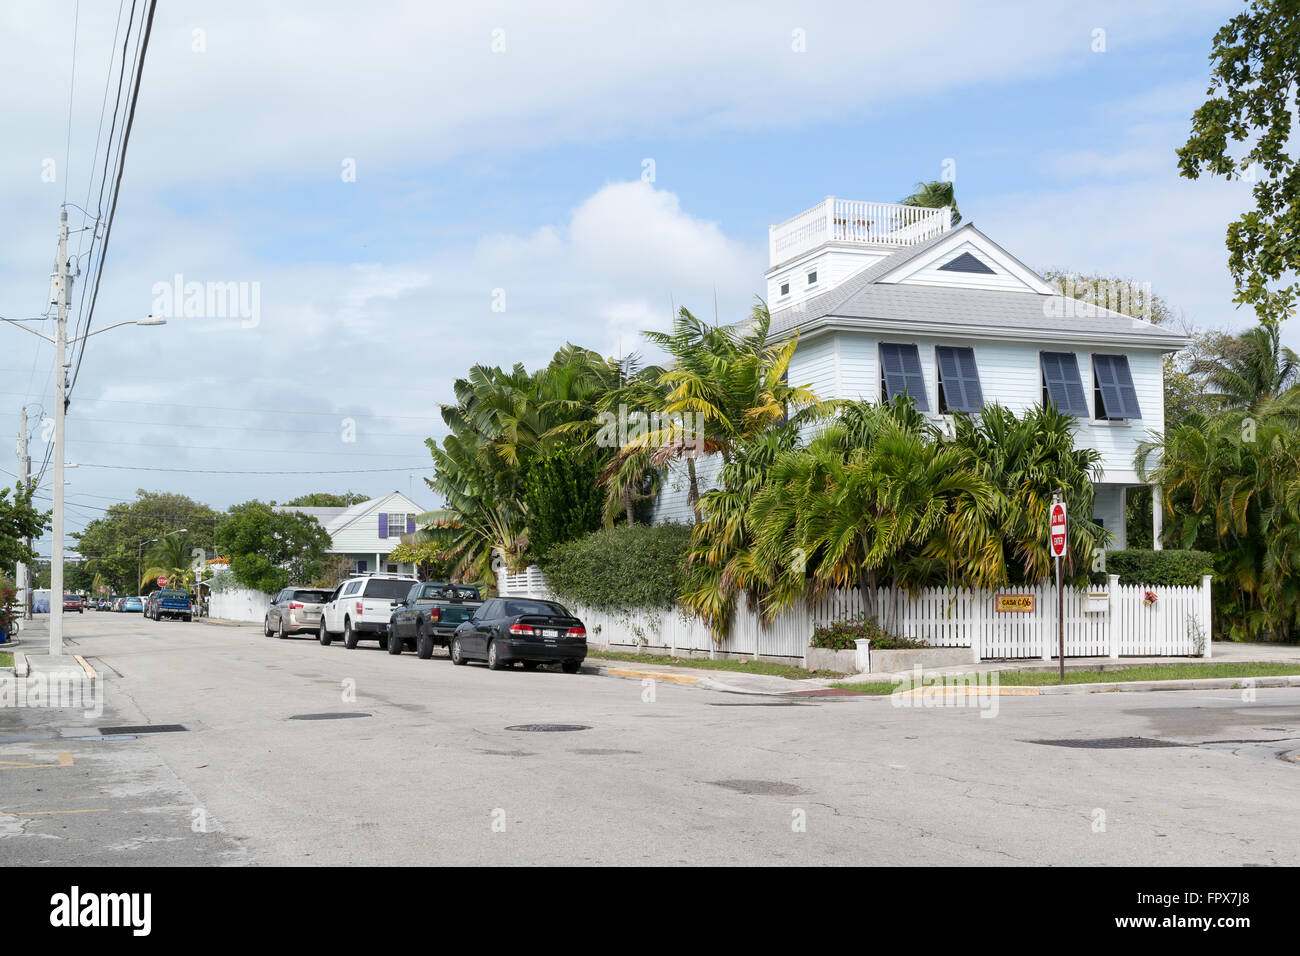 Macchine parcheggiate e case a Emma street a Key West, Florida Keys, STATI UNITI D'AMERICA Foto Stock